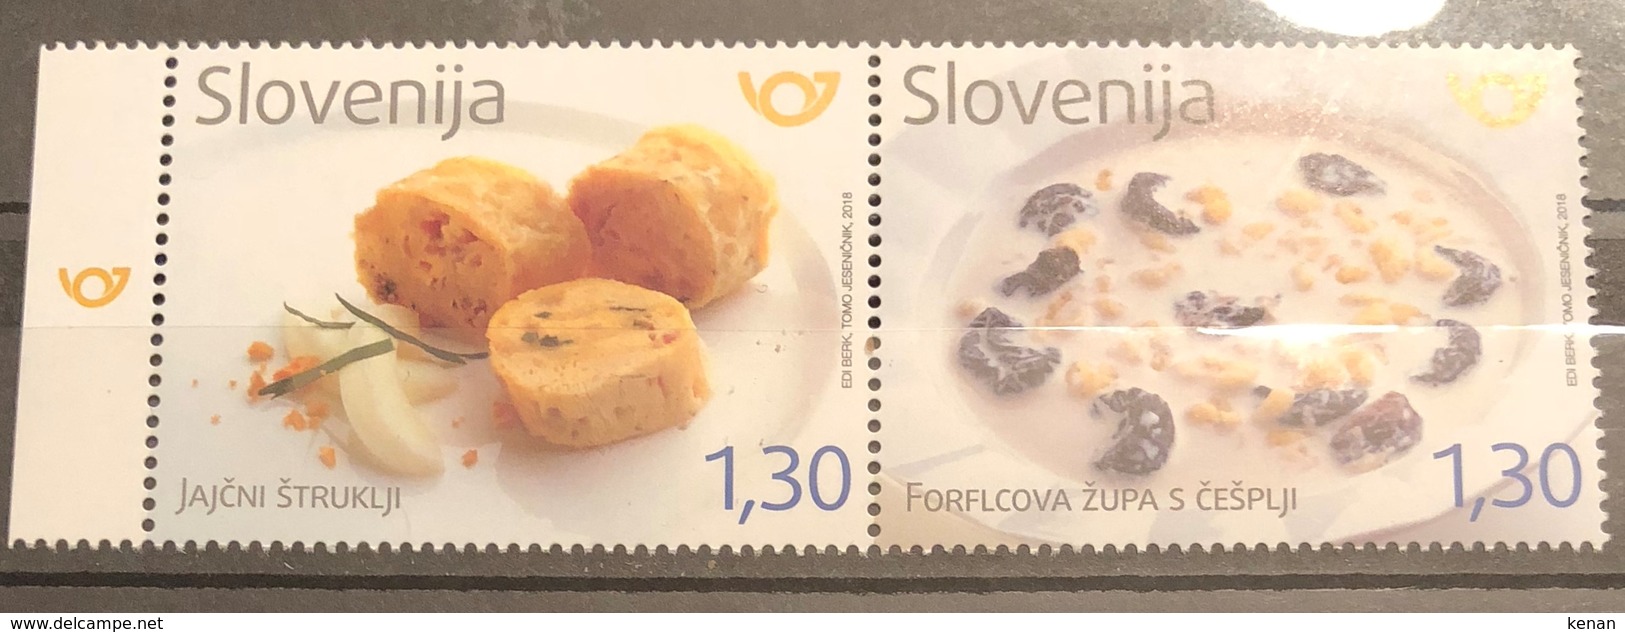 Slovenia, 2018, Gastronomy (MNH) - Slovenia